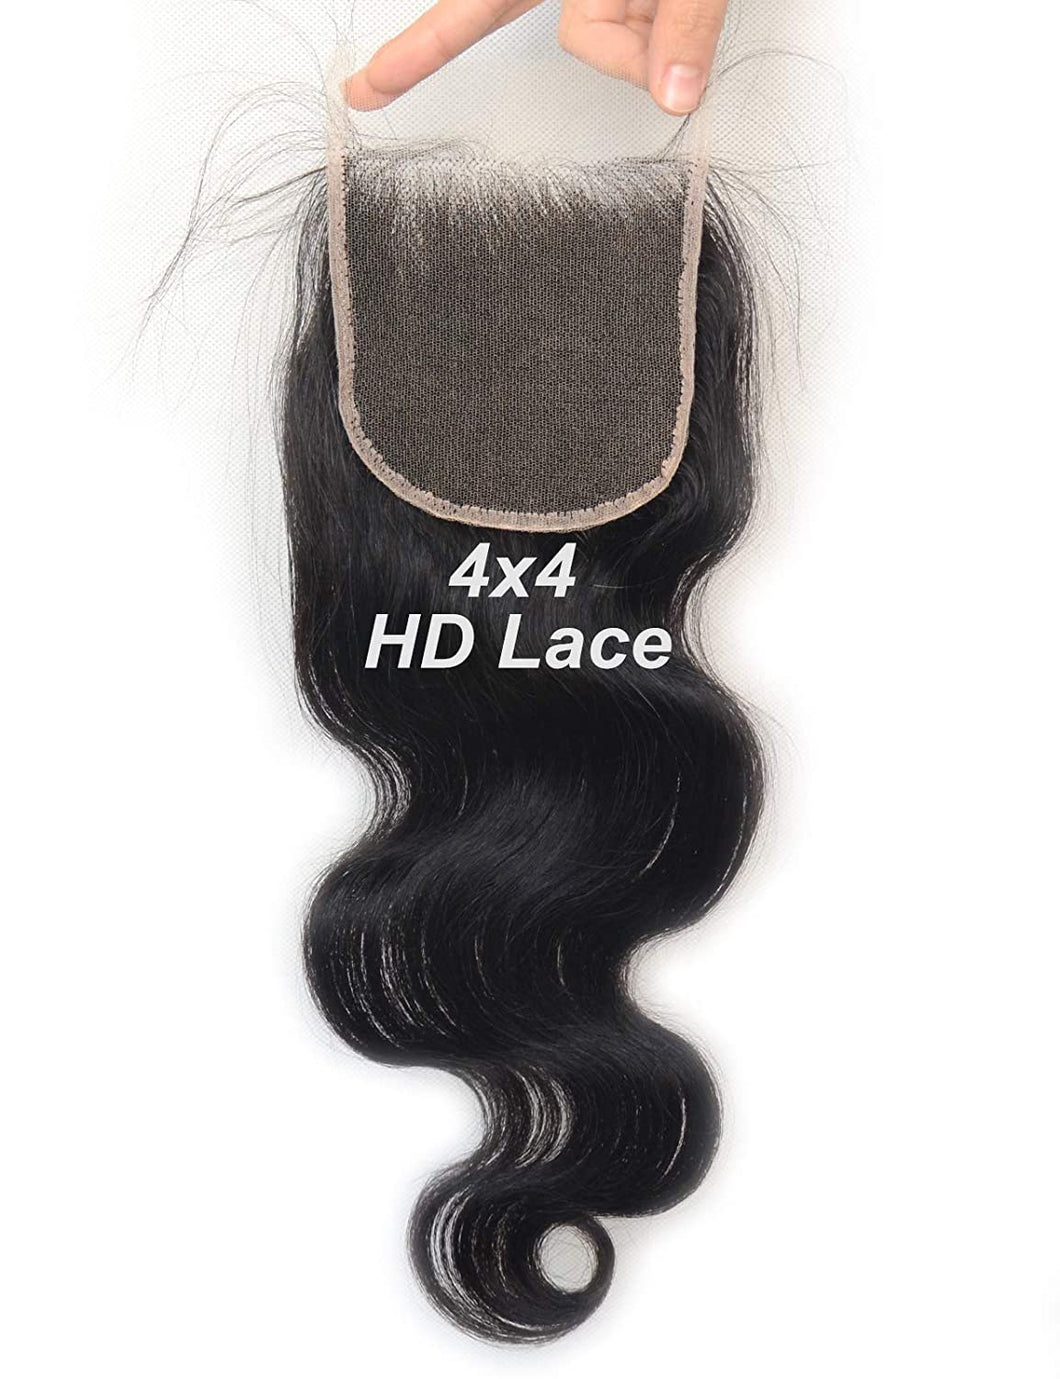 4x4 HD Lace Closure Body Wave Brazilian Human Virgin Hair Swiss Lace Pieces Bleached Knots Free Part Natural Color